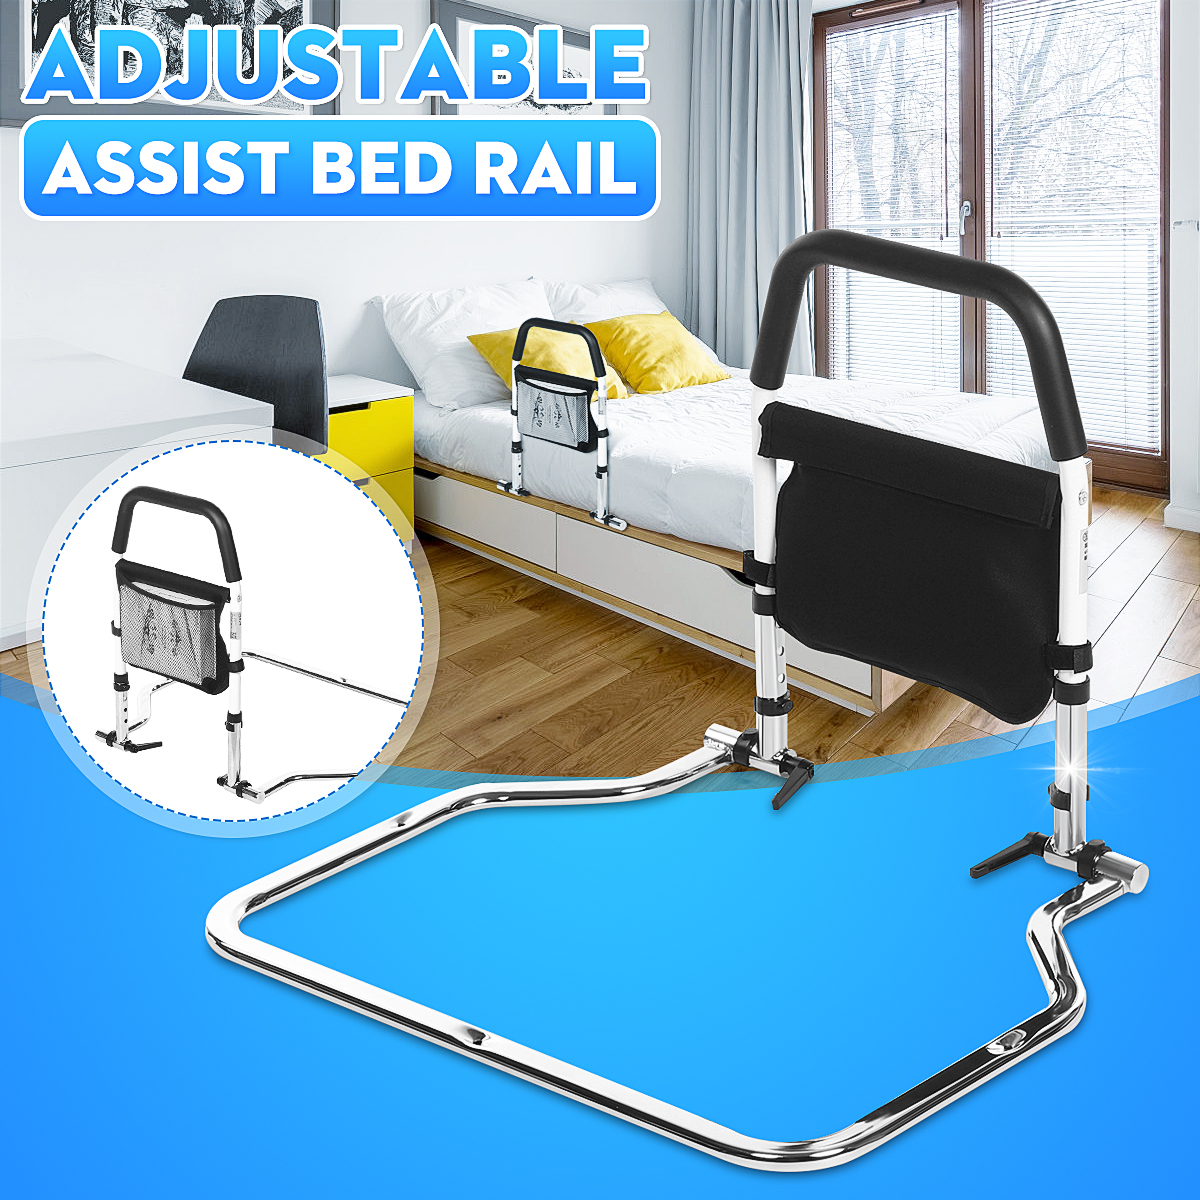 Adjustable-Bed-Rail-Bedside-Assist-Handrail-Handle-for-Elderly-Patients-Pregnants-1785253-1